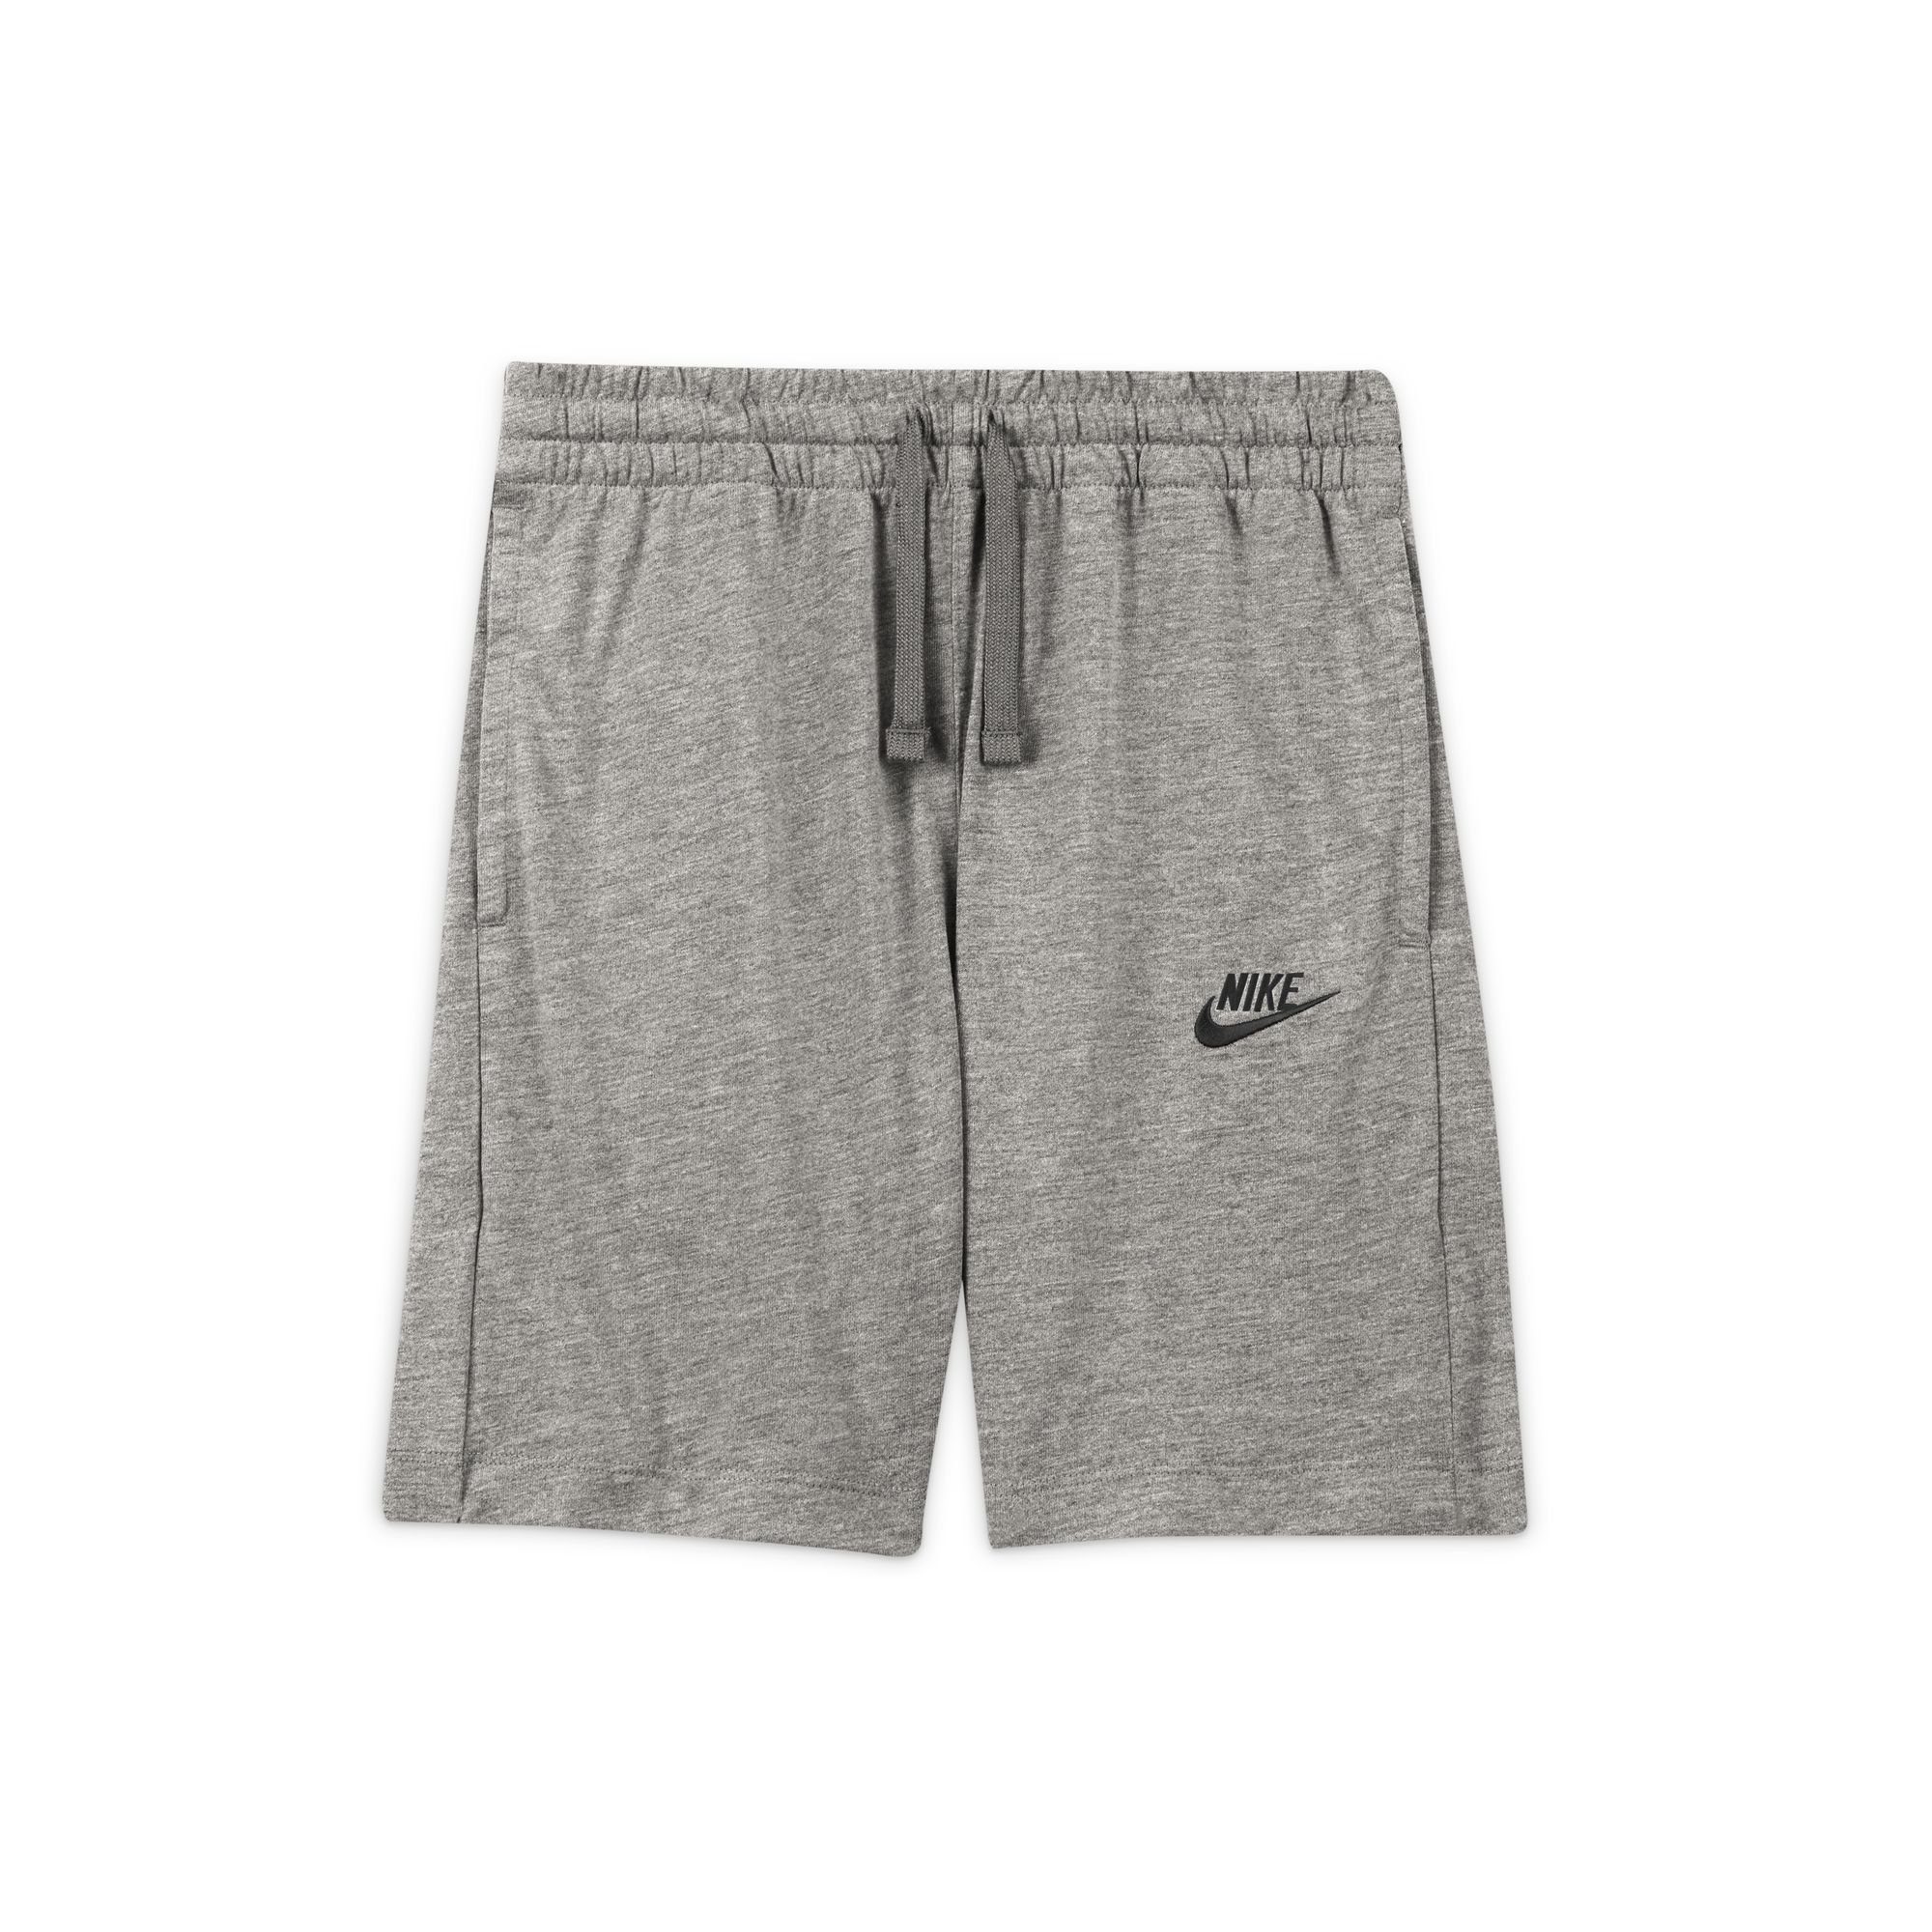 SHORTS Nike Shorts KIDS' (BOYS) JERSEY Sportswear BIG grau